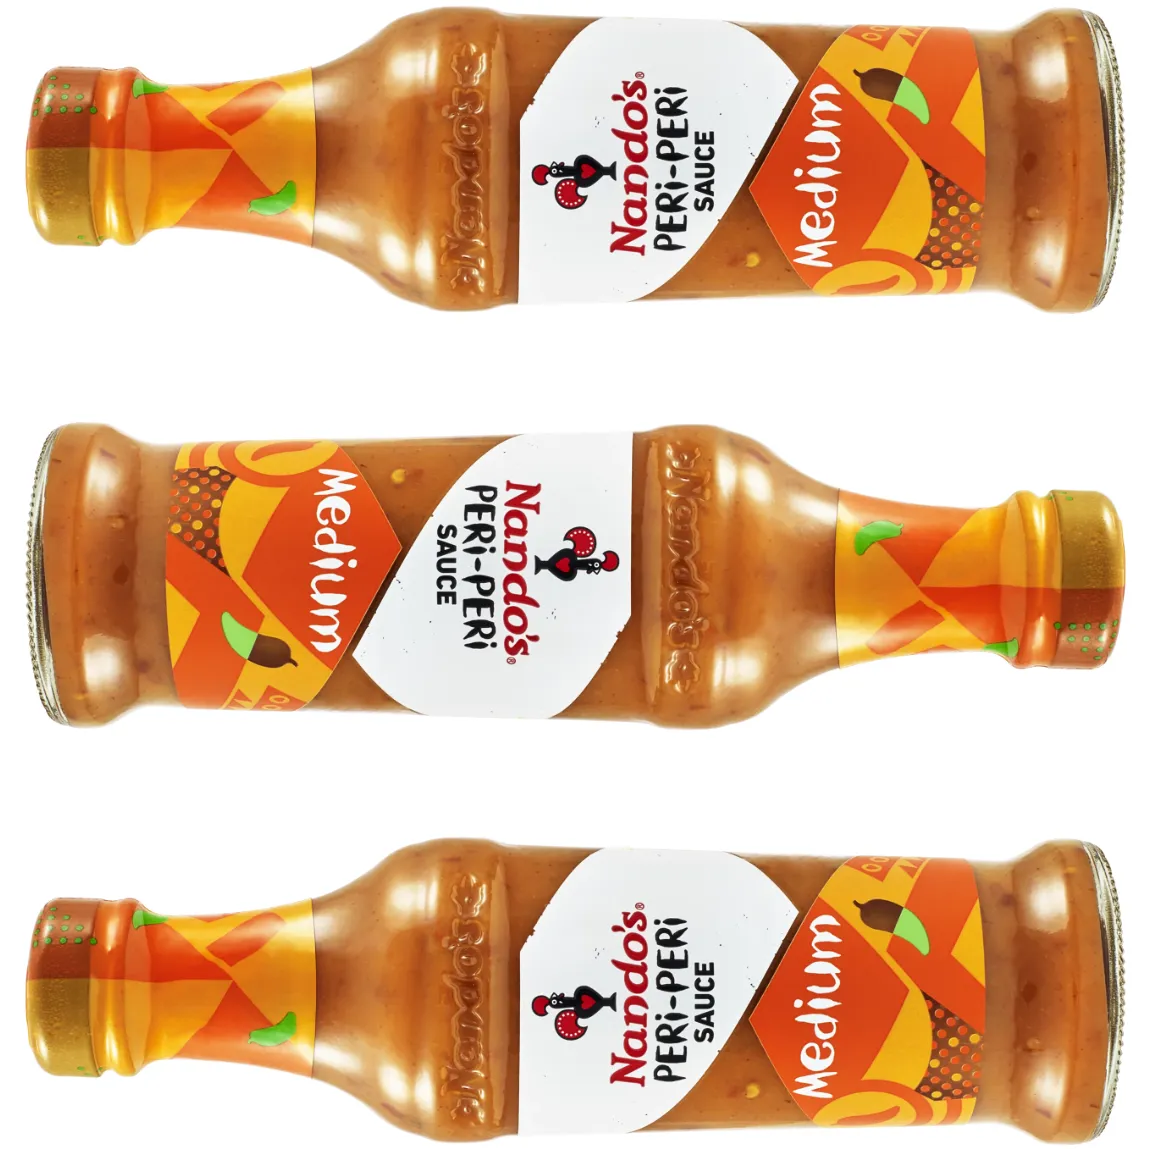 Free Bottle Of Nando'S Peri-Peri Hot Sauce